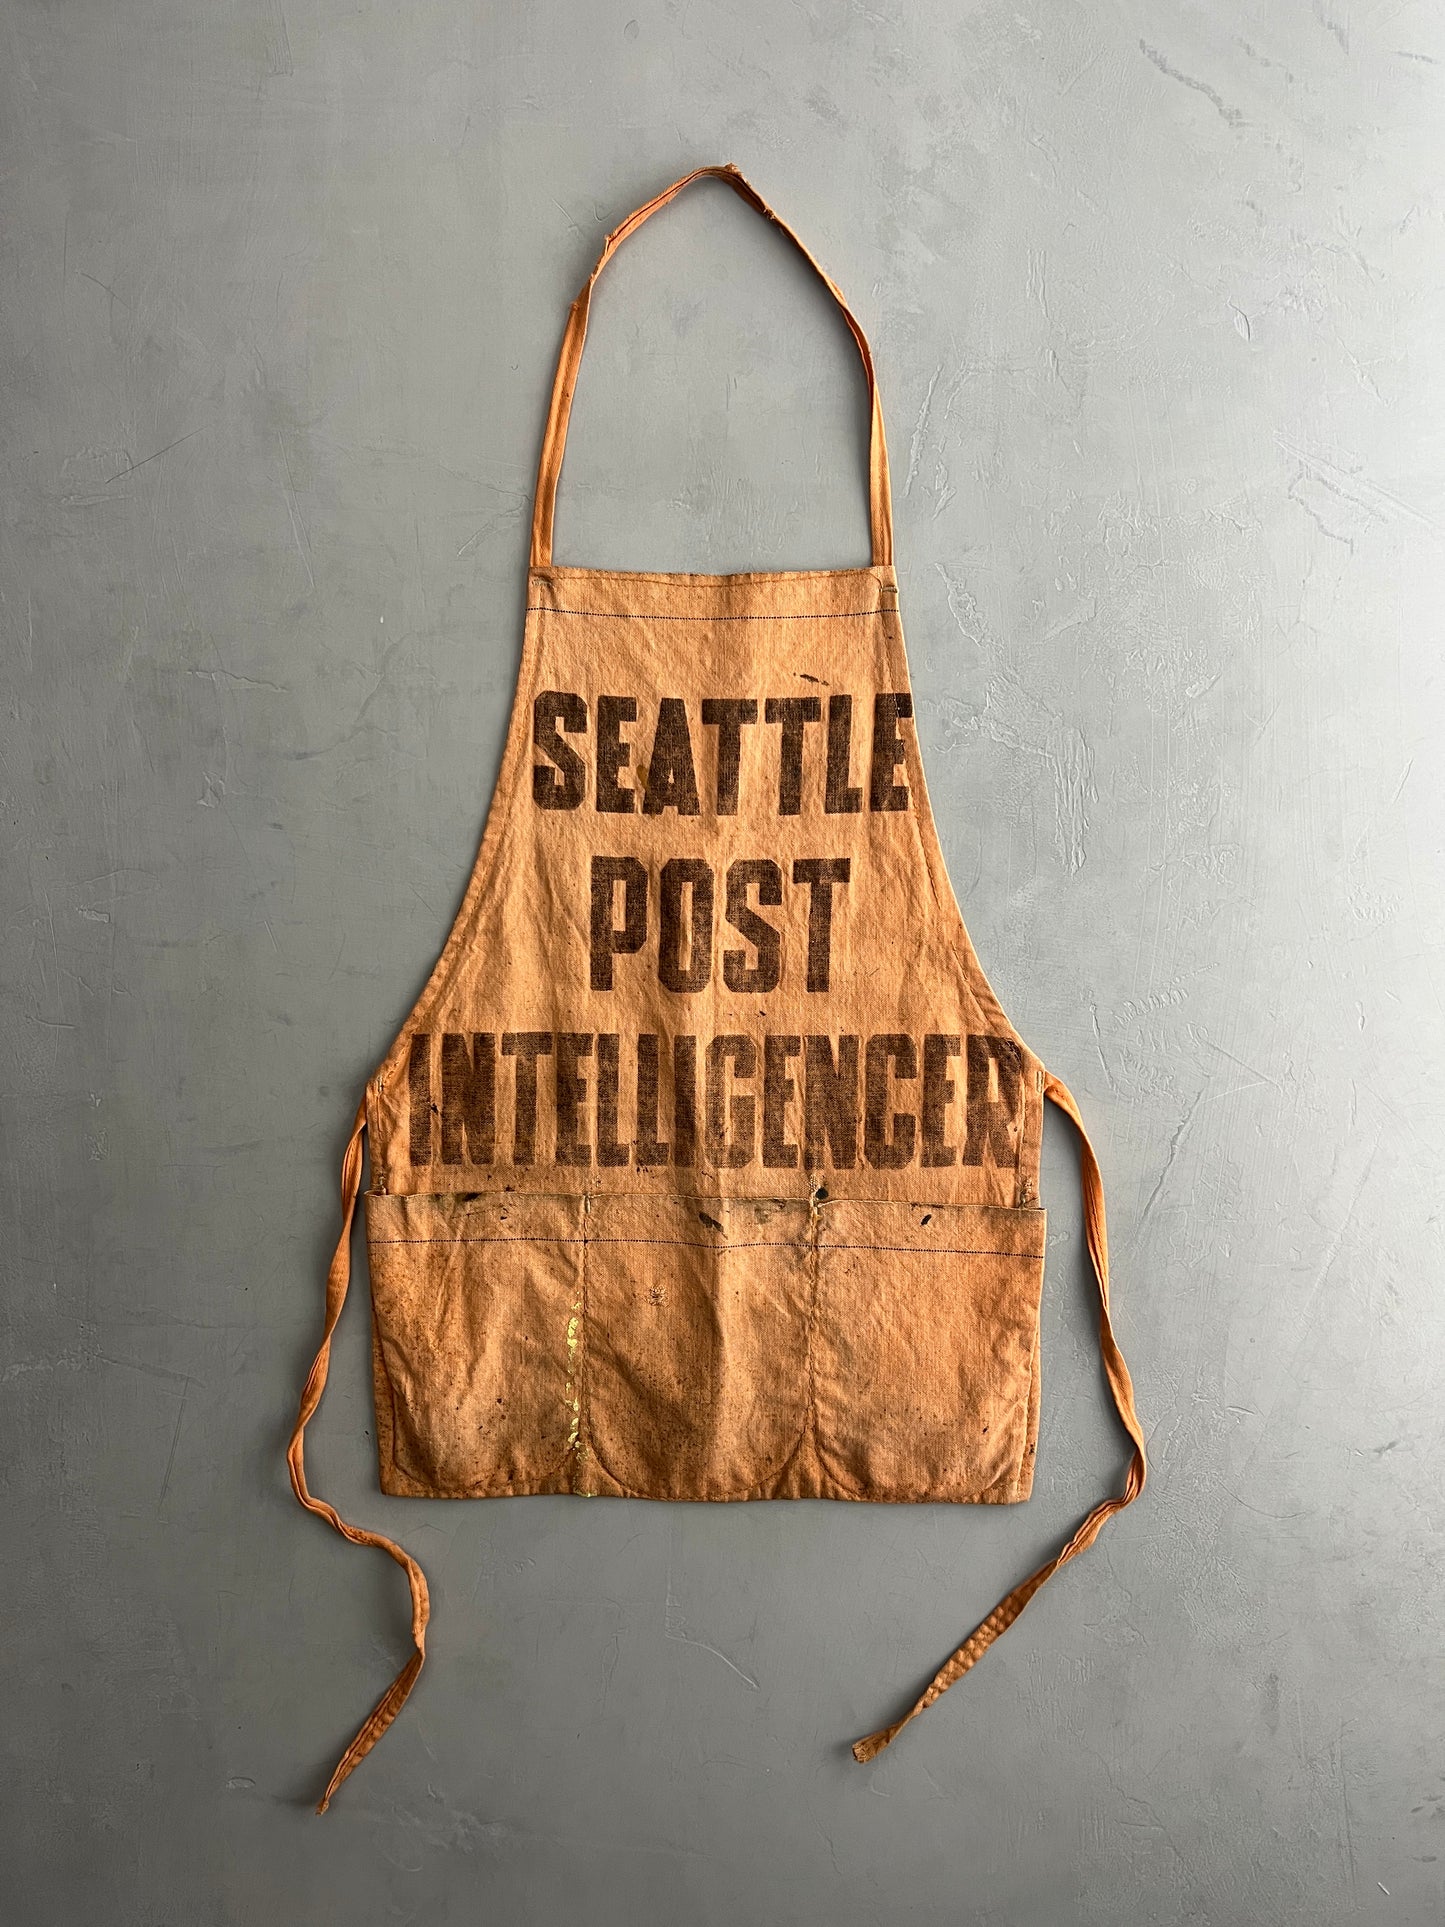 Seattle Post Intelligencer Apron